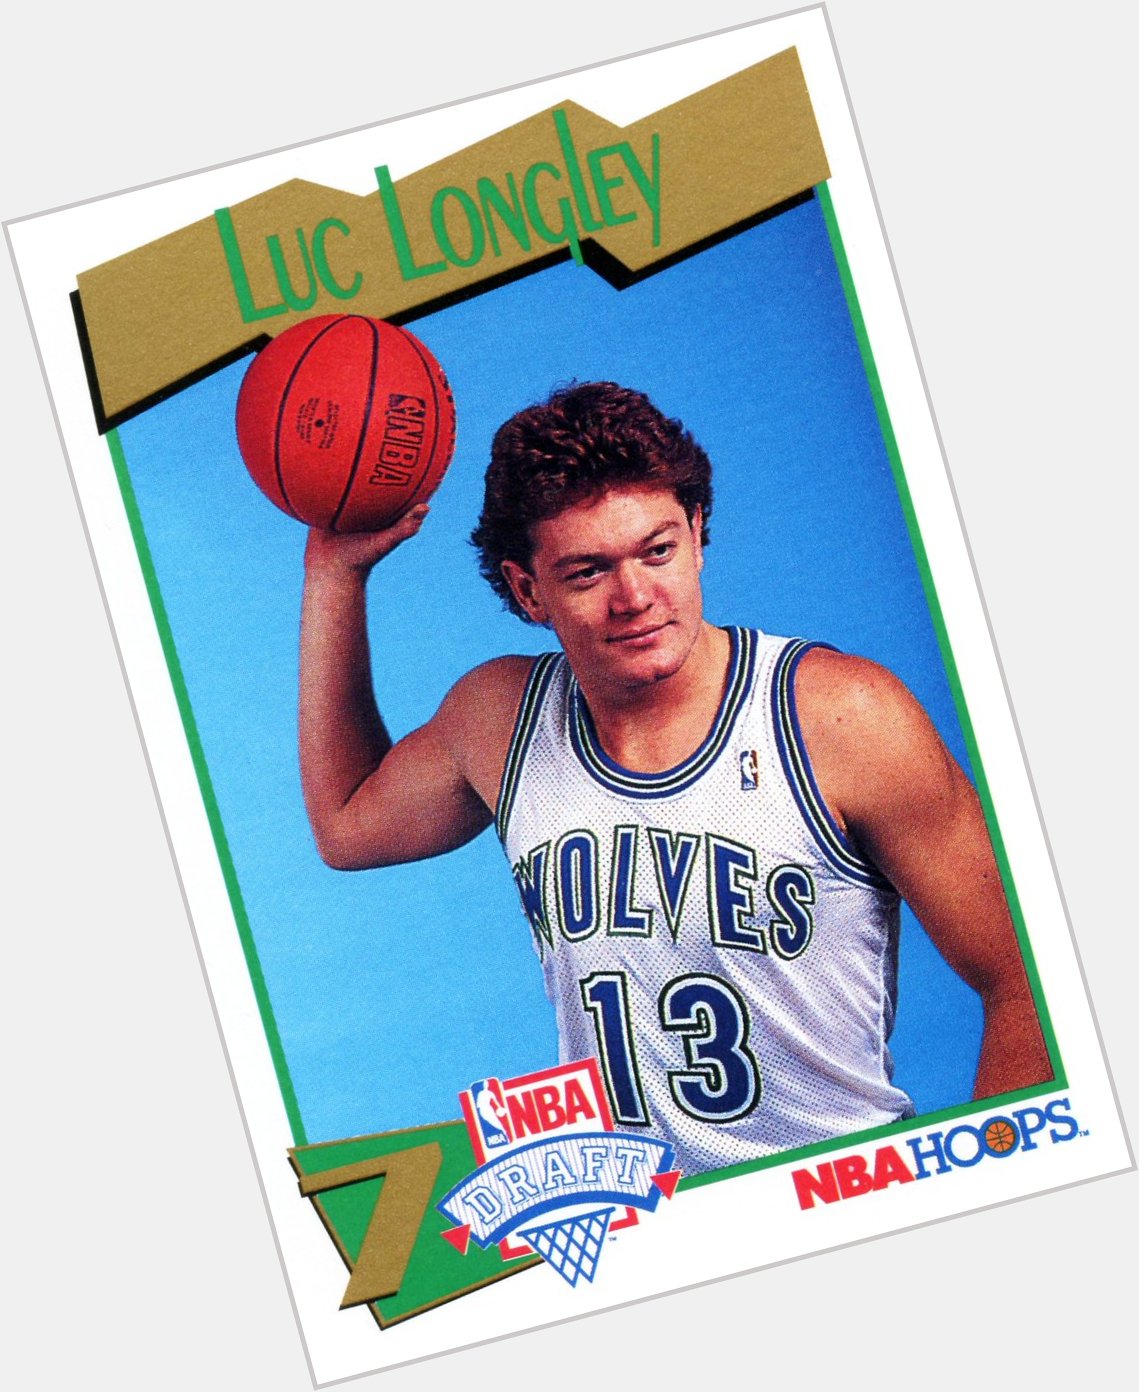 Happy Birthday to Luc Longley! 